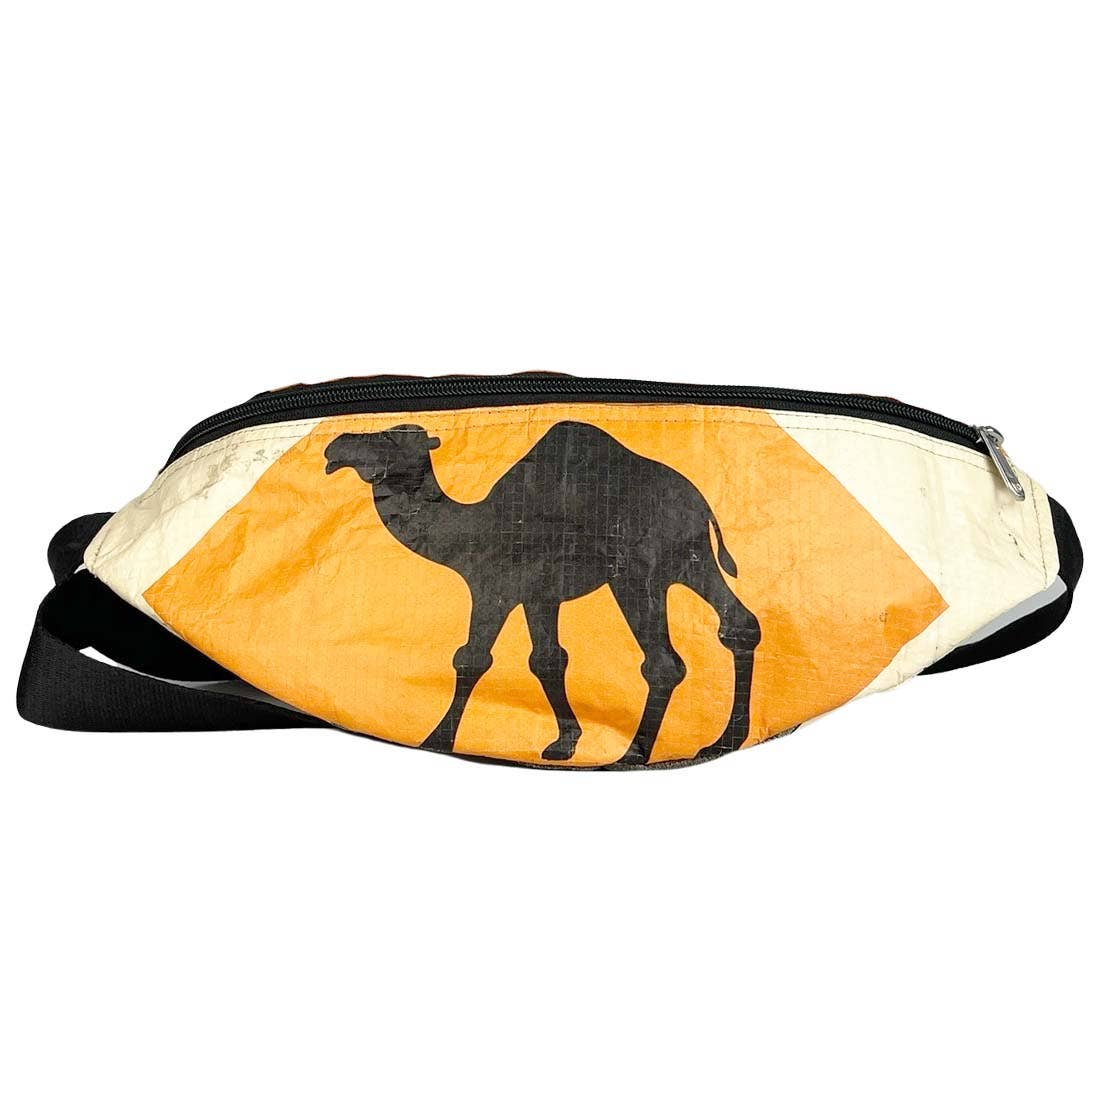 Malia Design - Recycled Cement Bag Hip Sack - Camel or Pegasus